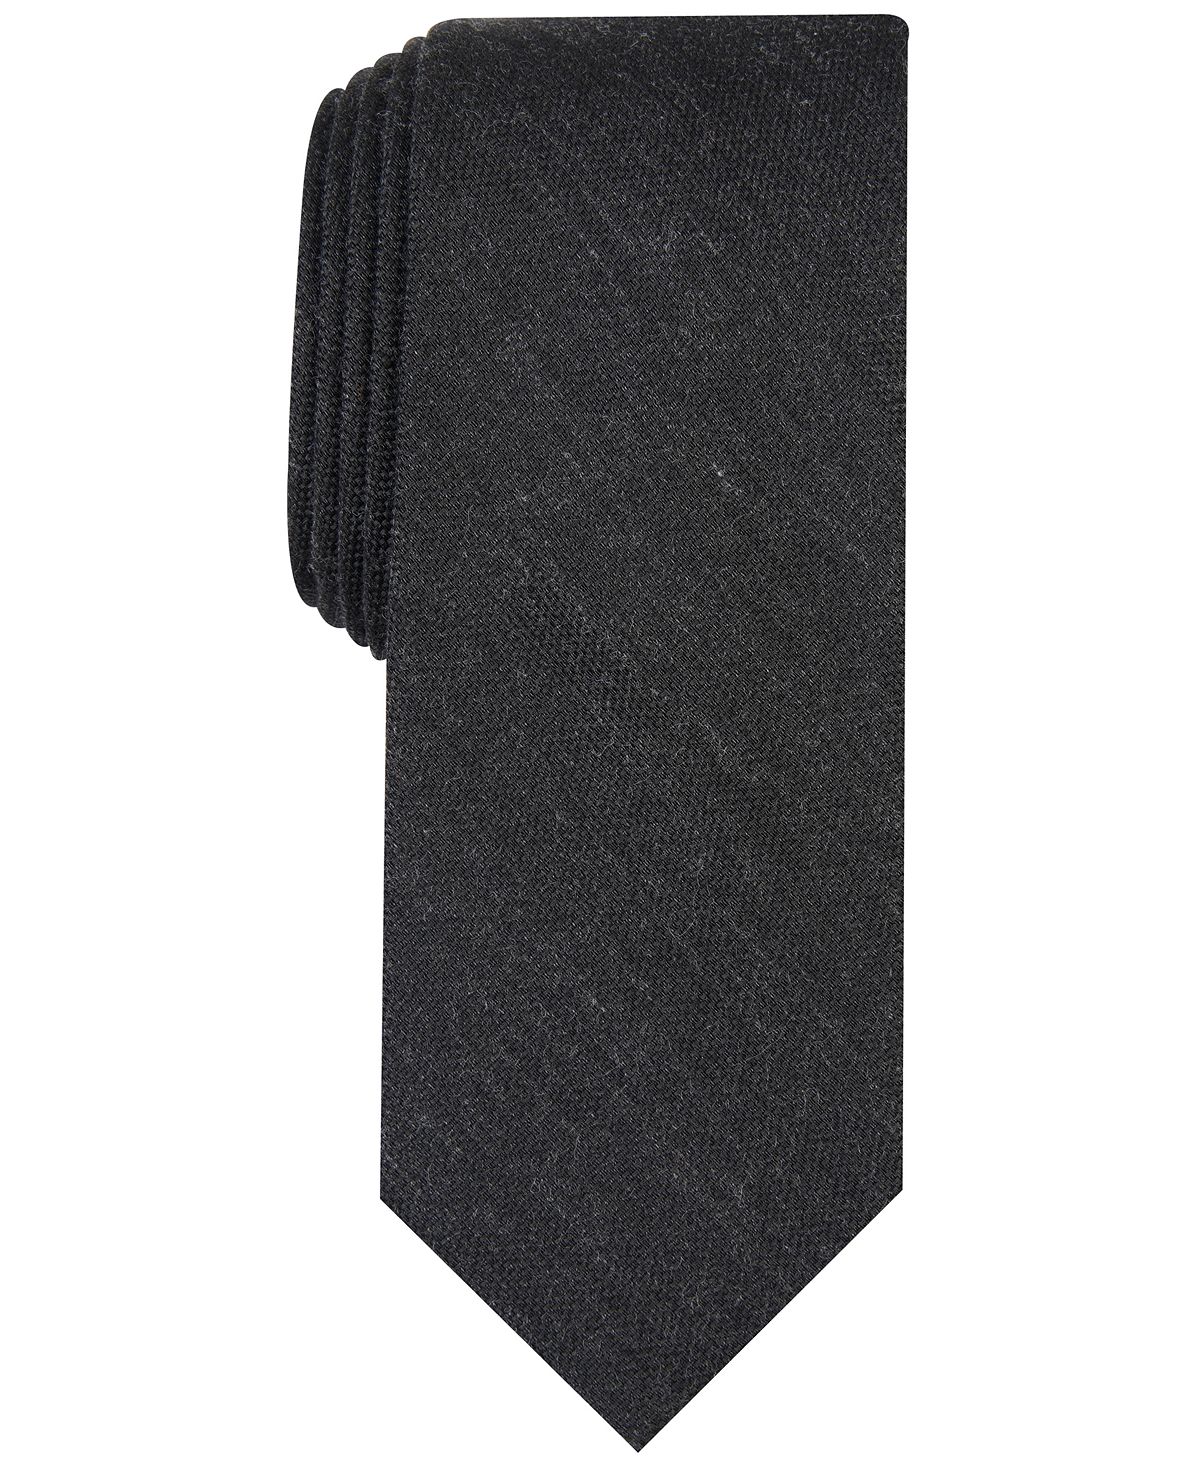 st aubyn edward dunbar Мужской однотонный тонкий галстук Dunbar Bar III